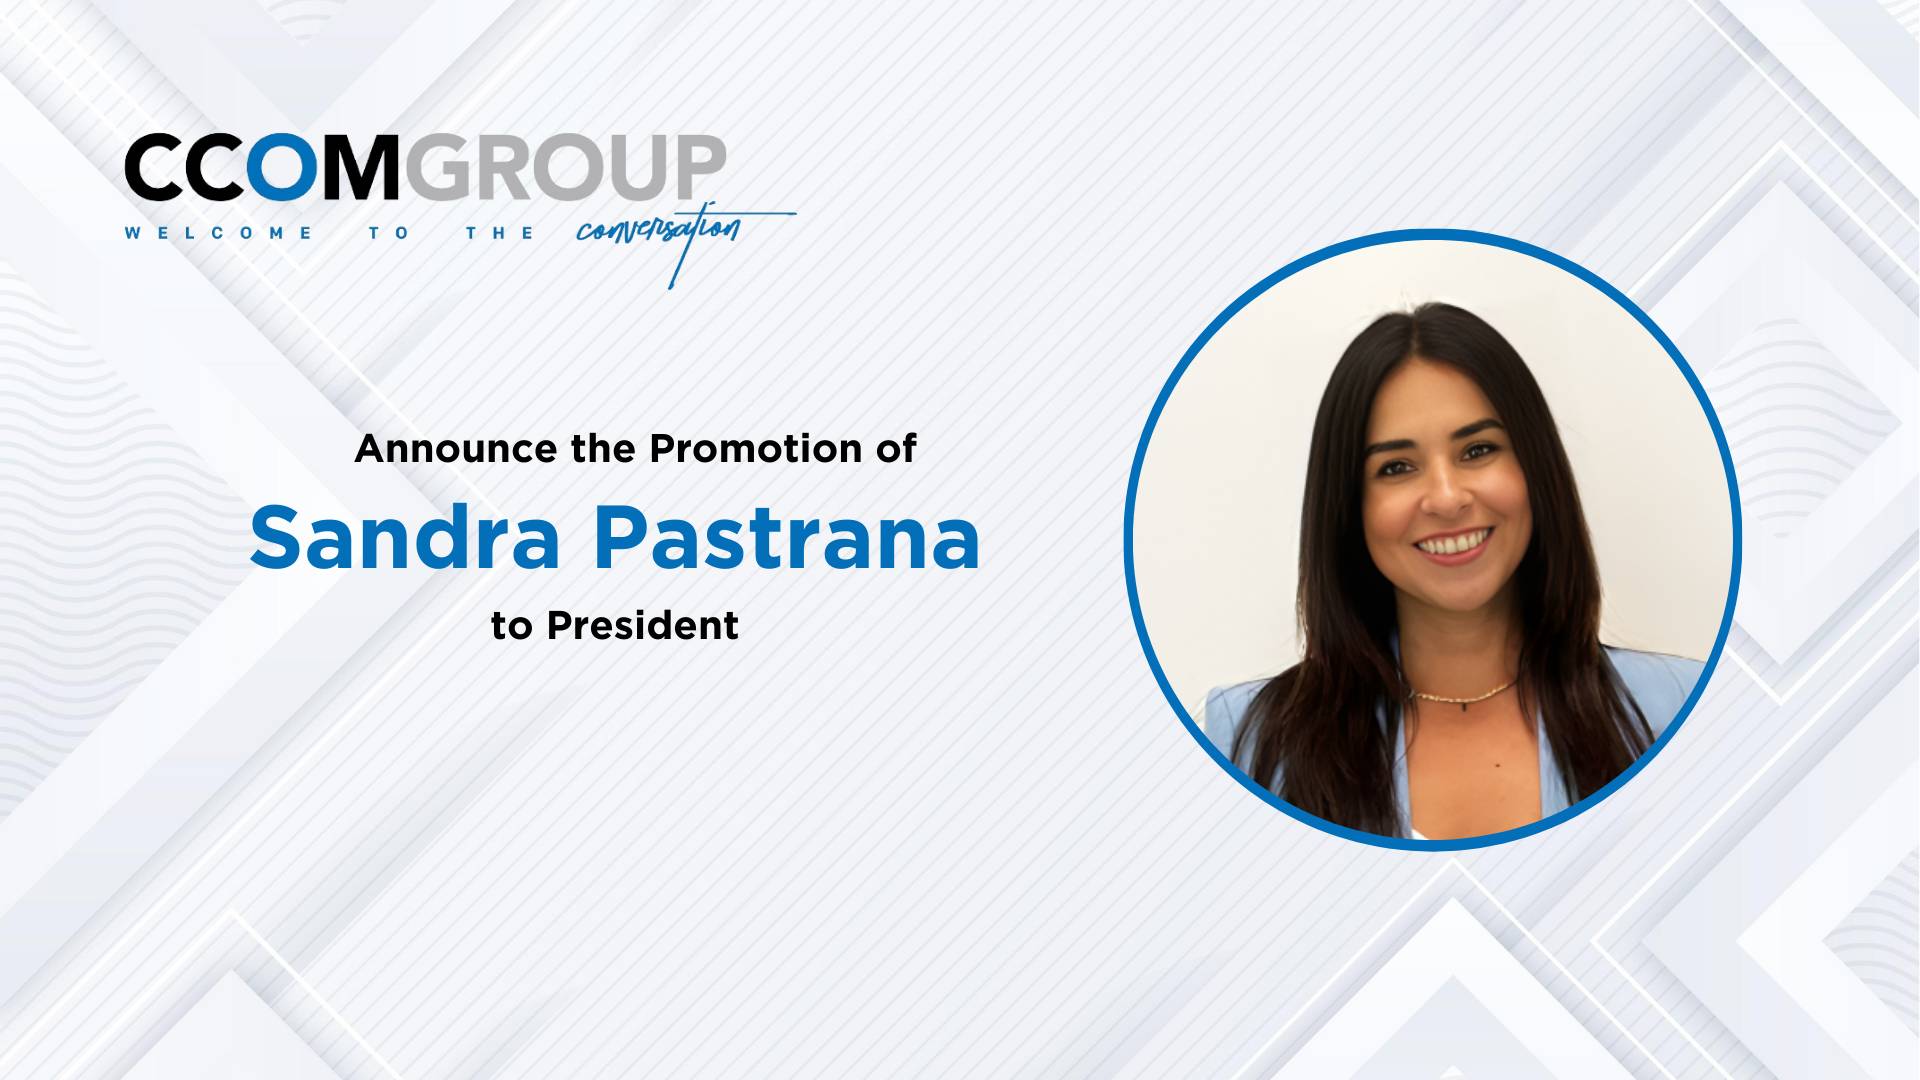 Marketing-Communications Agency CCOMGROUP Names Sandra Pastrana President